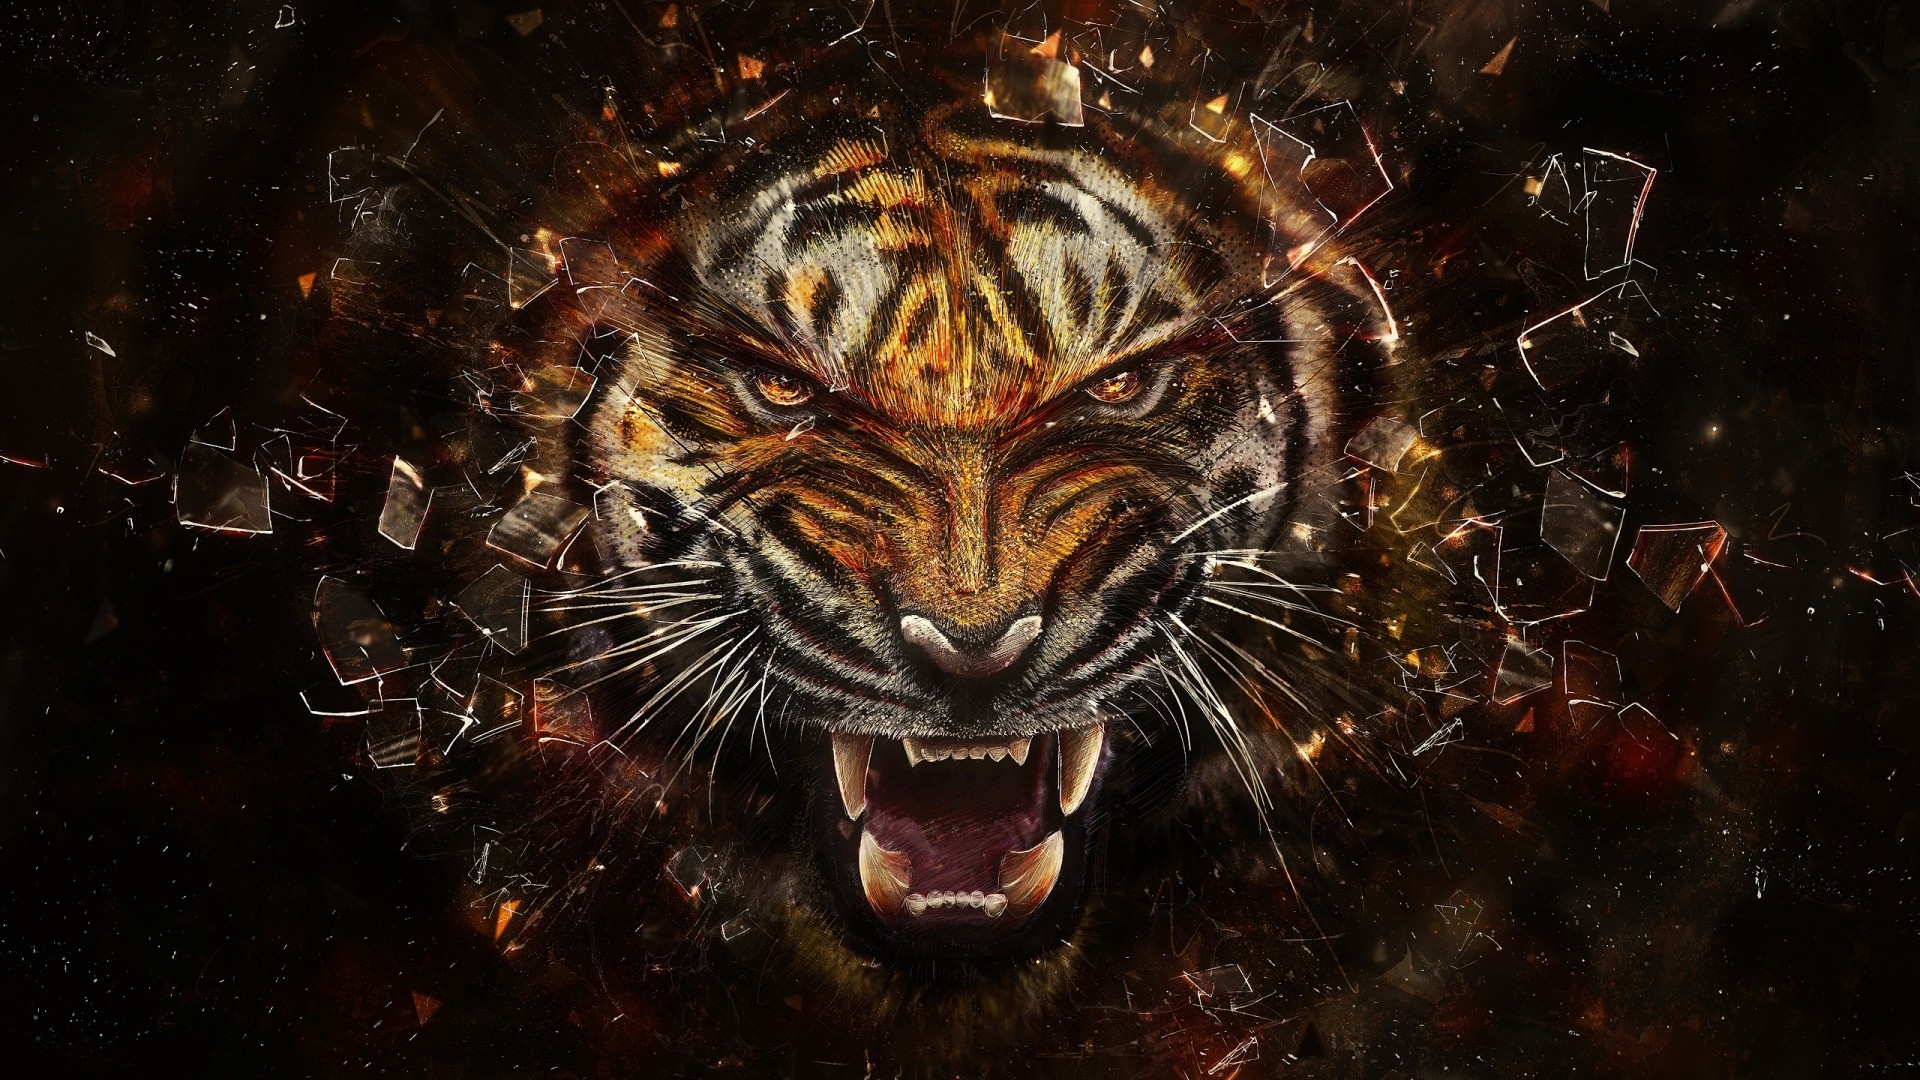 Tiger Glass Broken Glass Shards Face Teeth Animals Artwork Digital Art 1920x1080